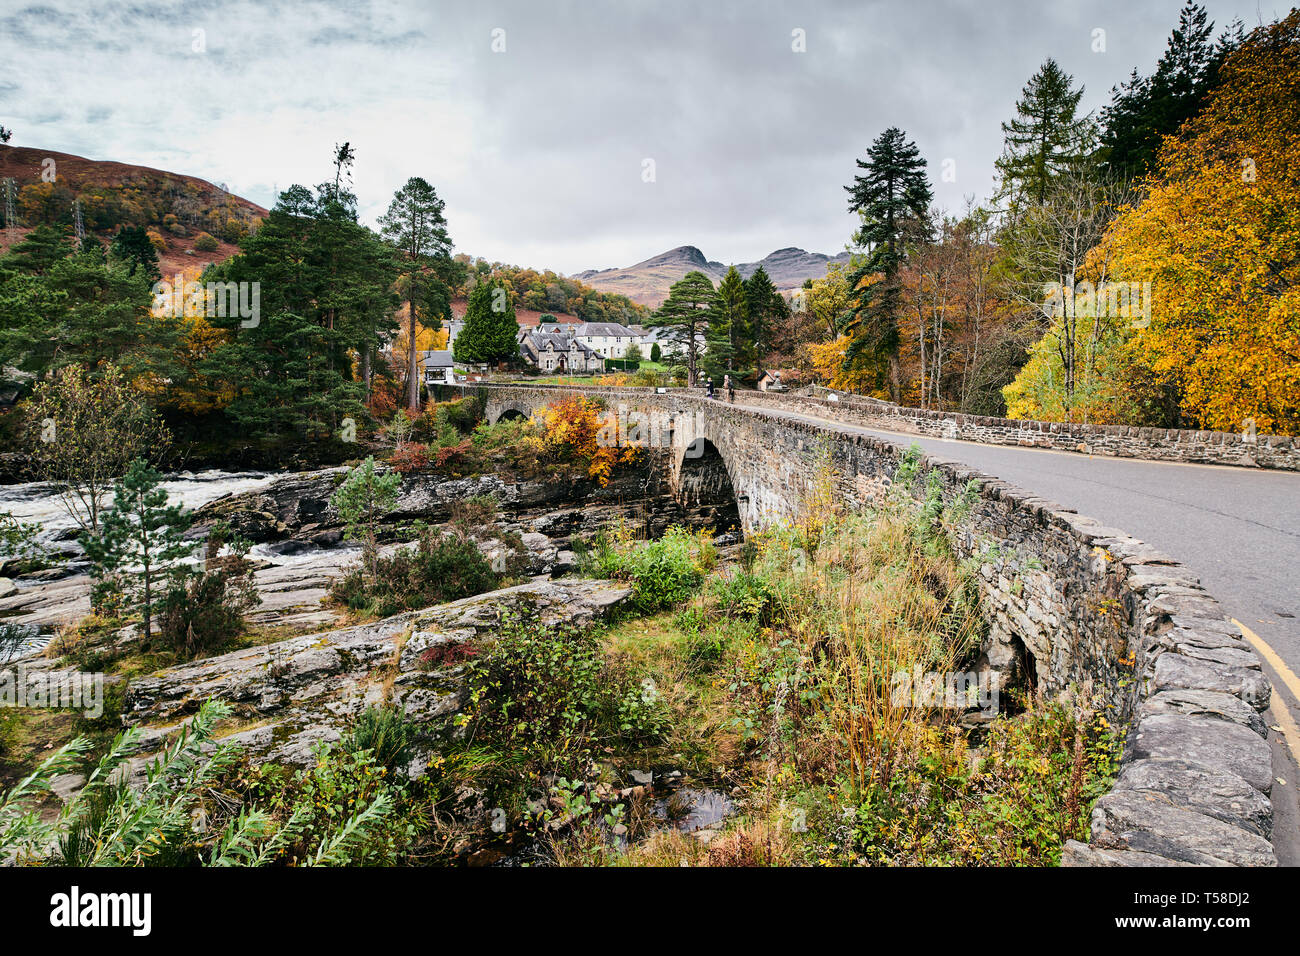 The Falls of Dochart in the town of Killin, Scotland Stock Photo